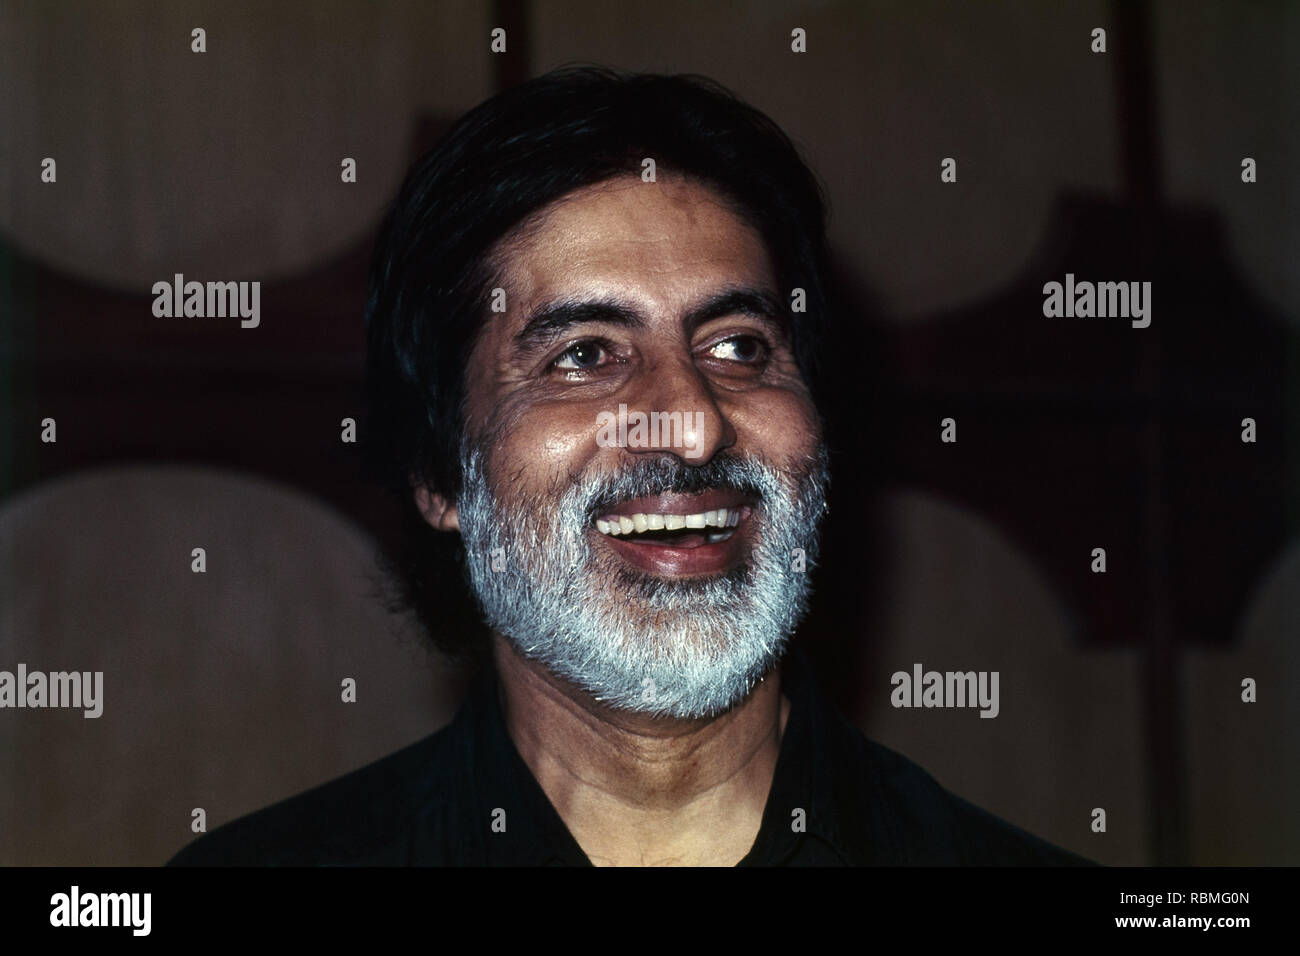 Amitabh Bachchan laughing, India, Asia Stock Photo - Alamy